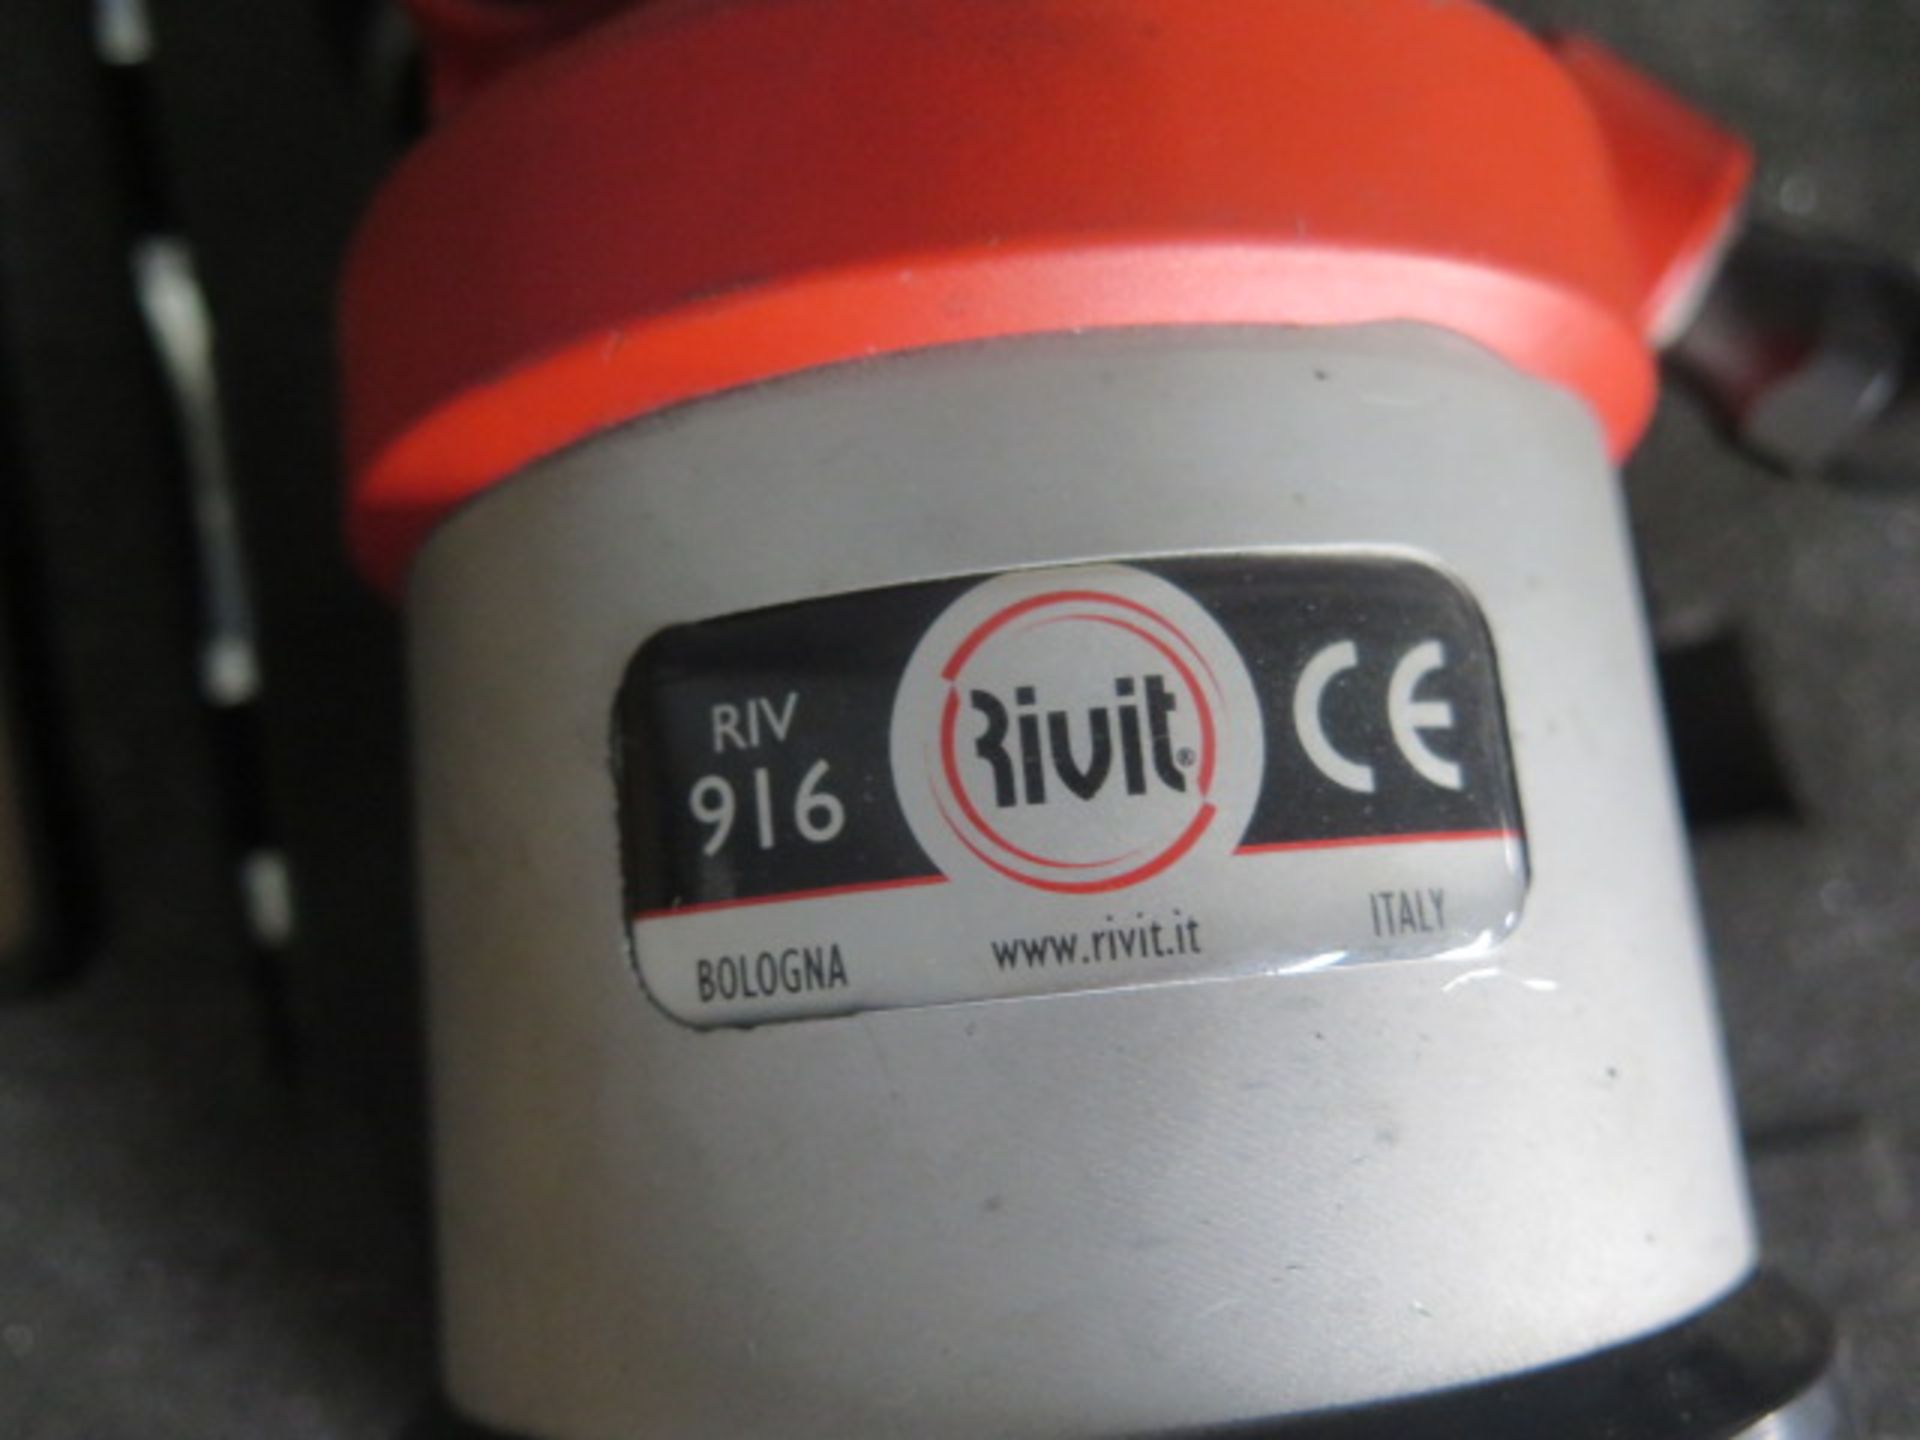 Rivit madl.RIV916 Pneumatic Threaded Nut Setter - Image 3 of 3